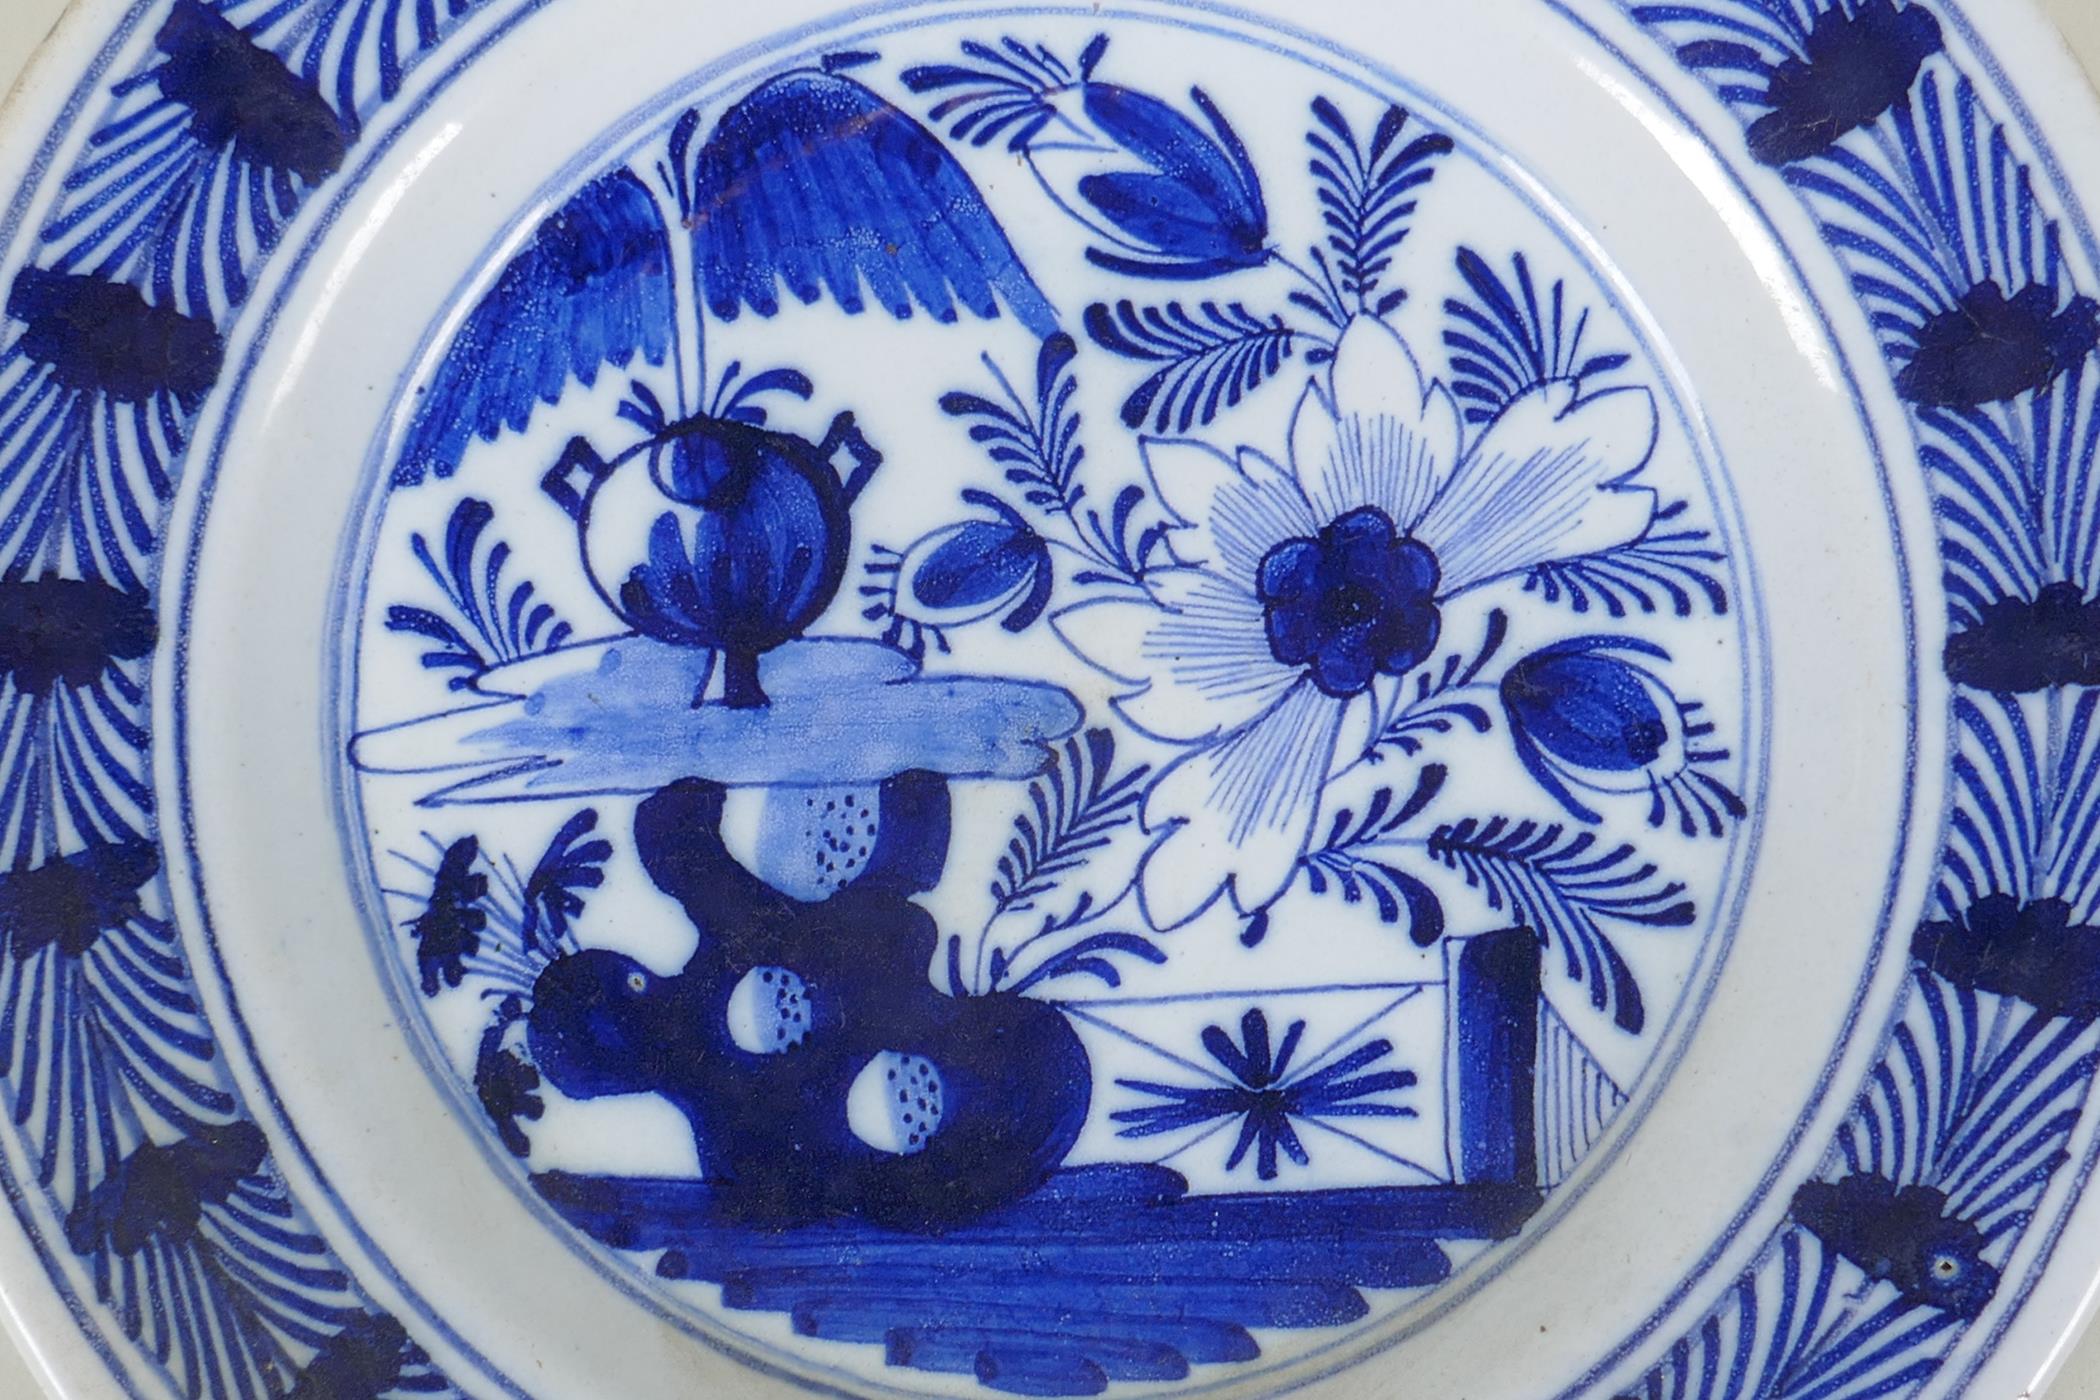 An C18th Dutch Delft blue plate with floral decoration, 23cm diameter - Image 2 of 4